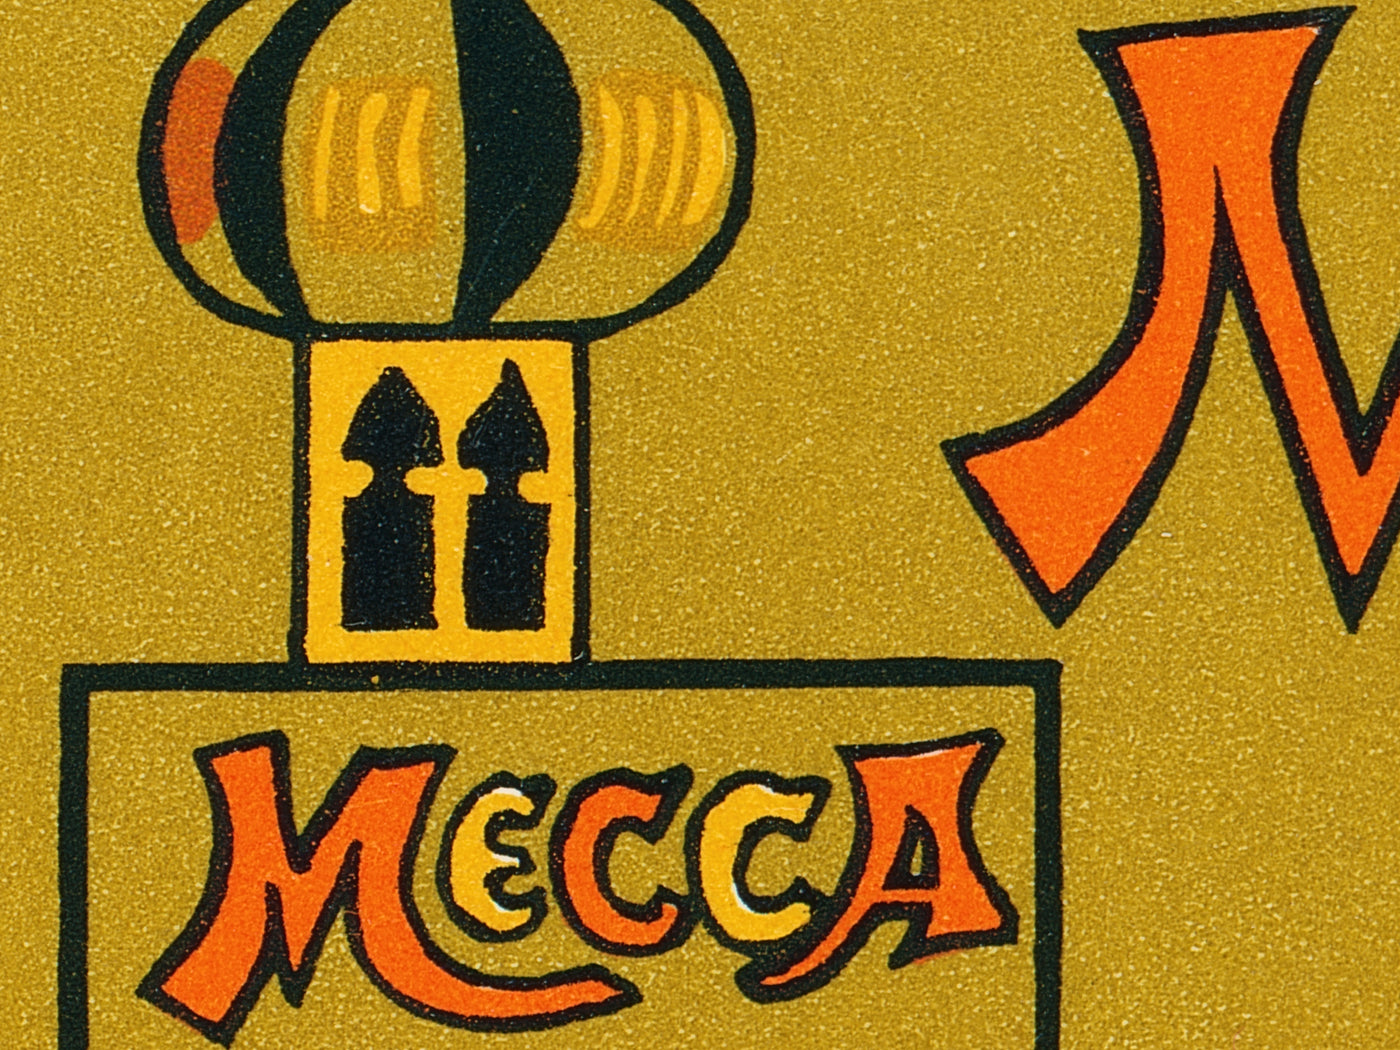 Mecca Motel Matchbook Print